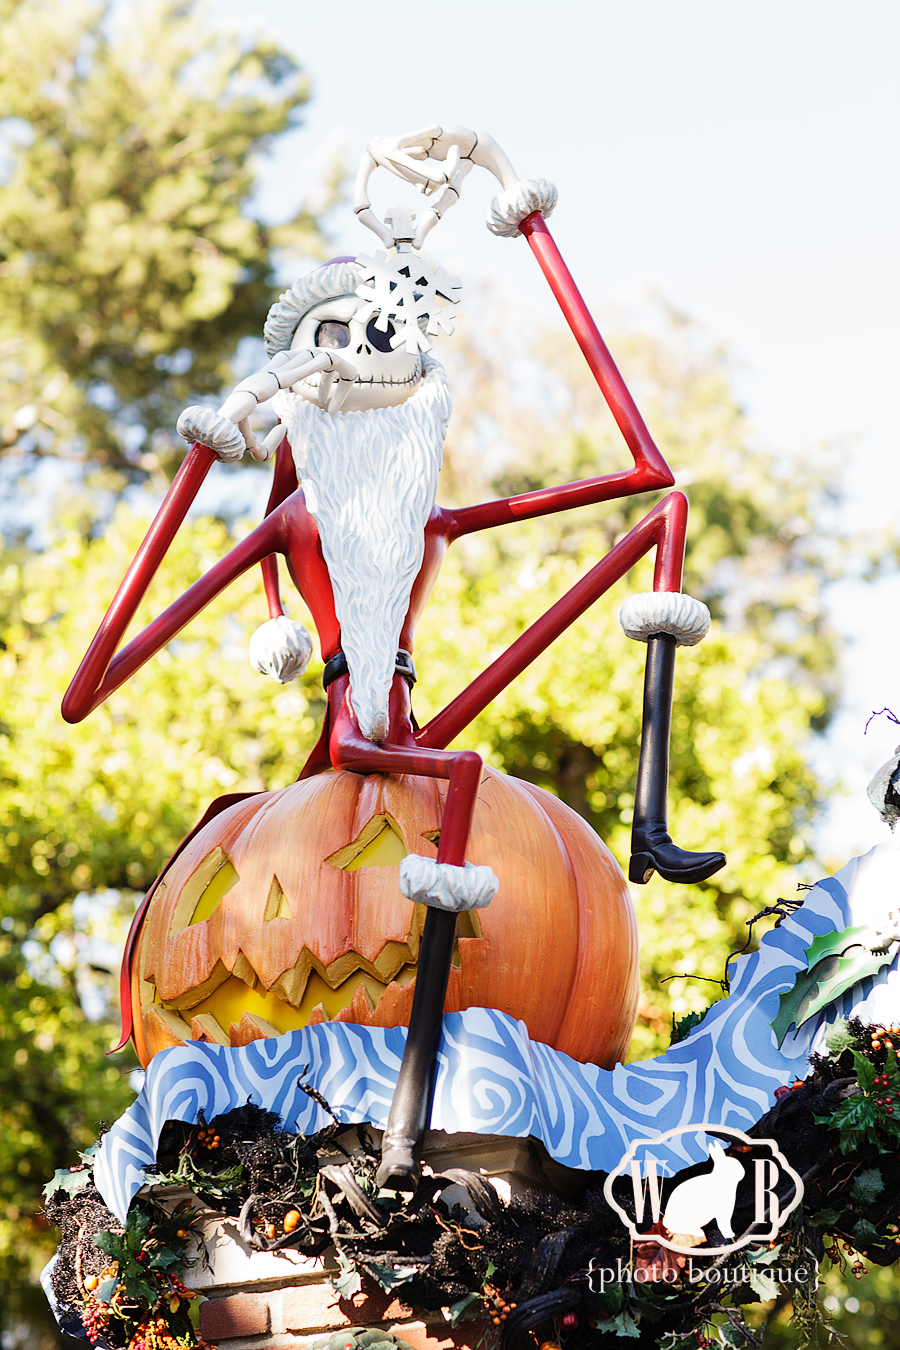 Tim Burton's Nightmare Before Christmas Haunted Mansion Details at Disneyland // White Rabbit Photo Boutique